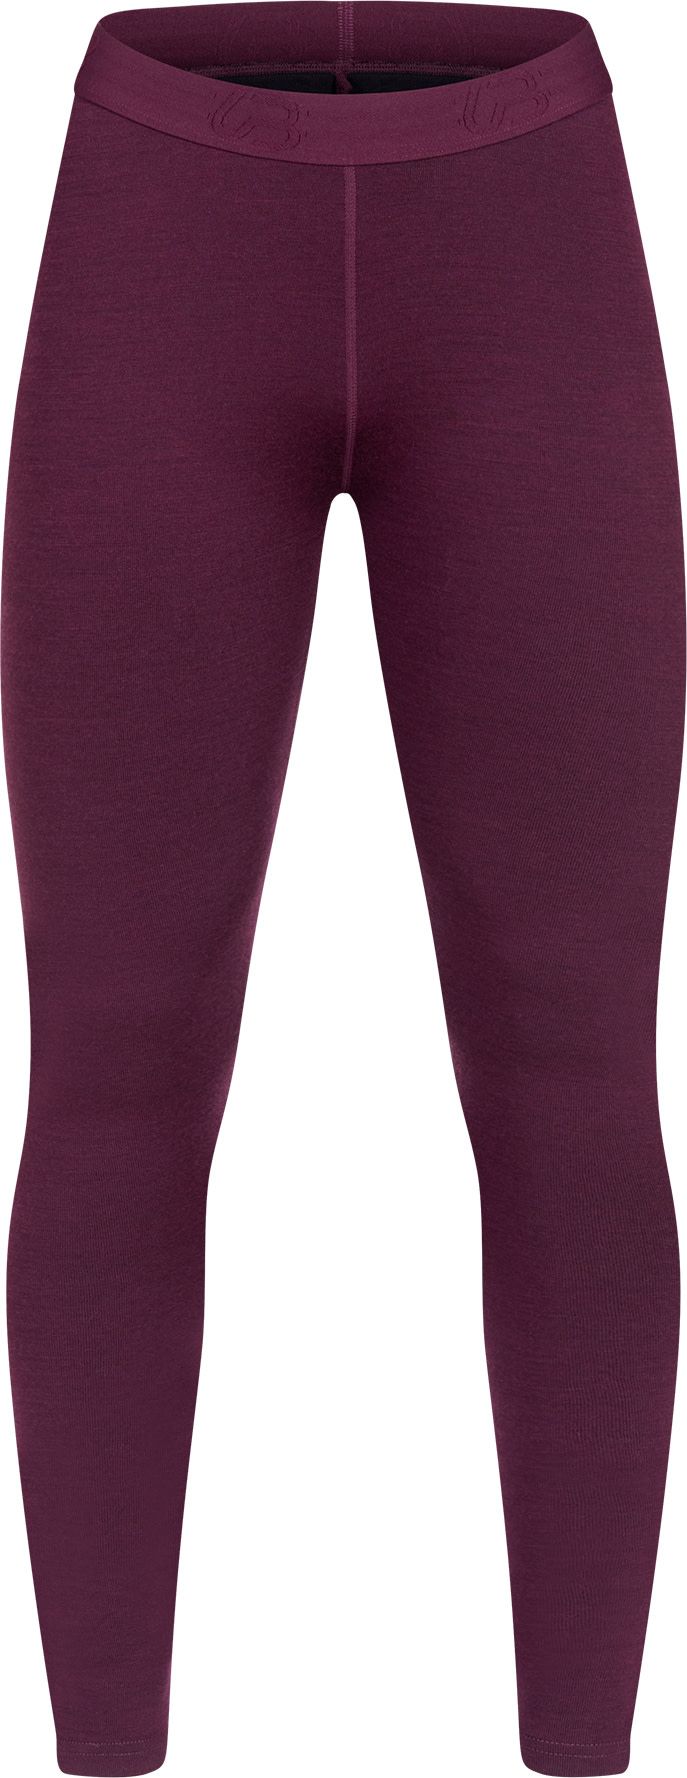 Urberg Women's Selje Merino-Bamboo Pants Potent Purple